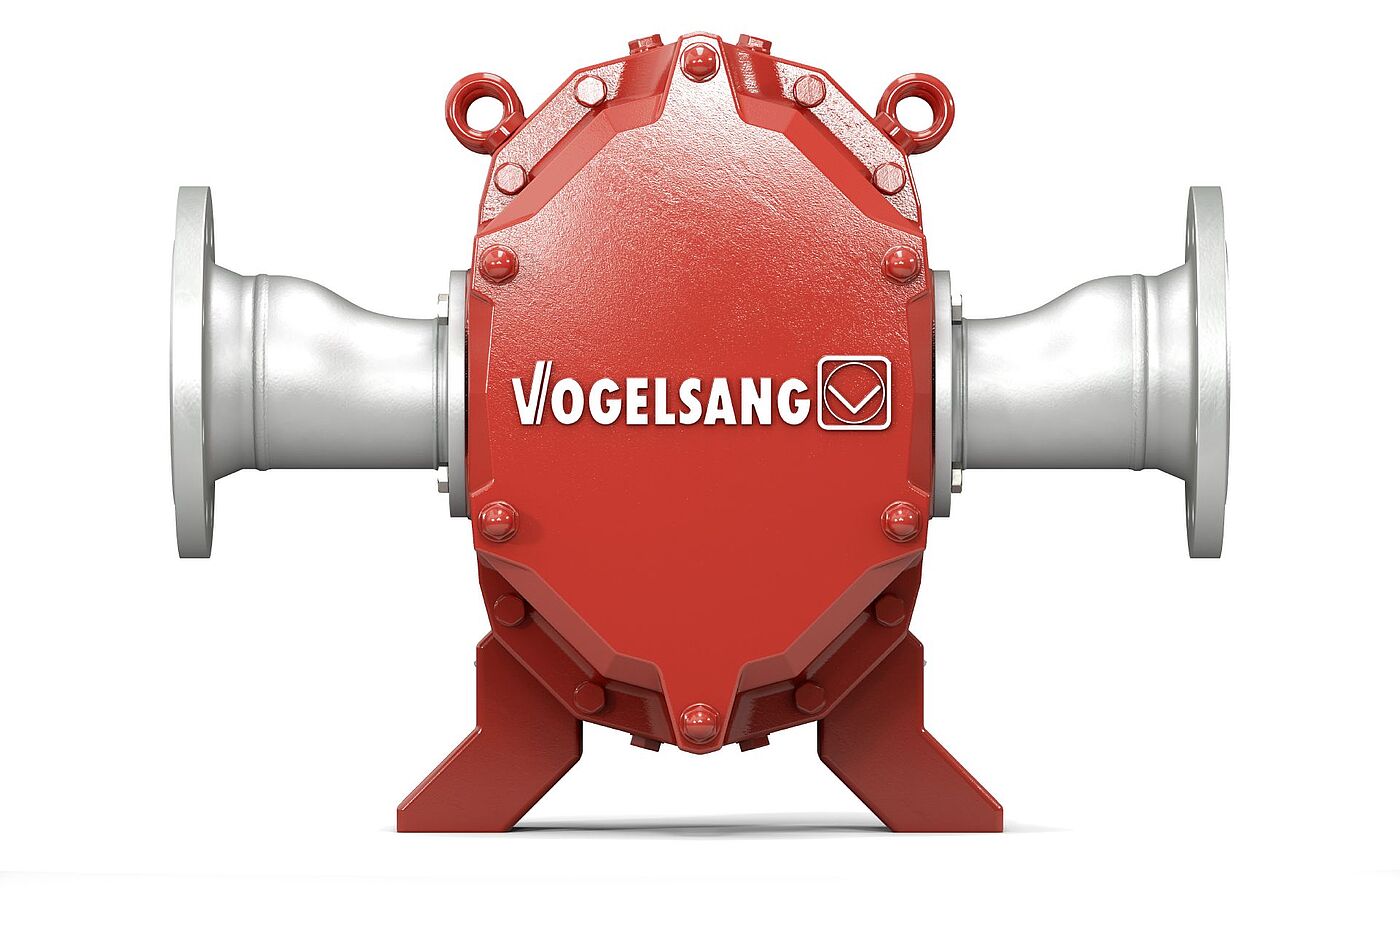 Pompa a lobi rotativi della serie EP di Vogelsang